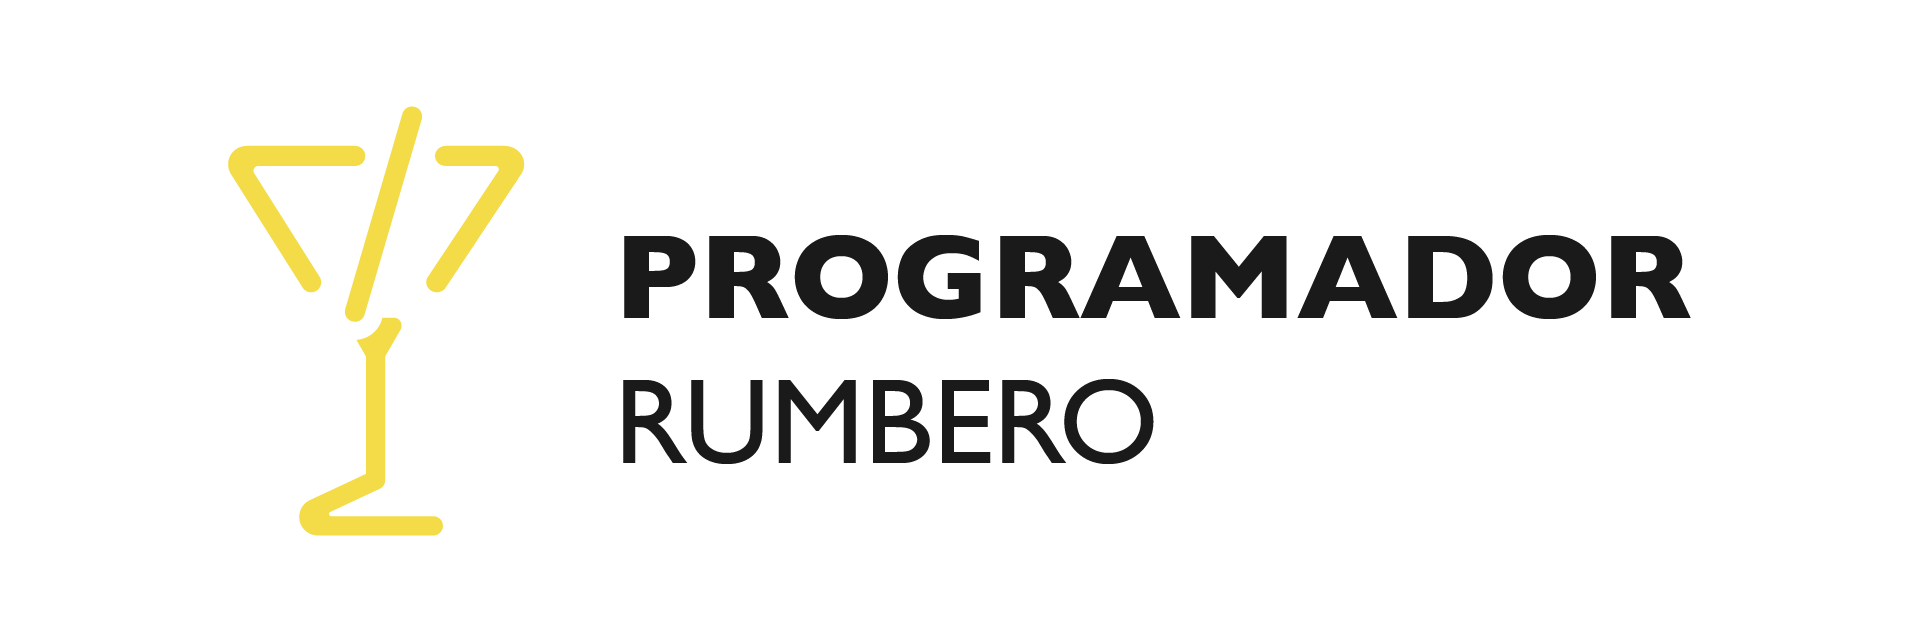 Programador Rumbero